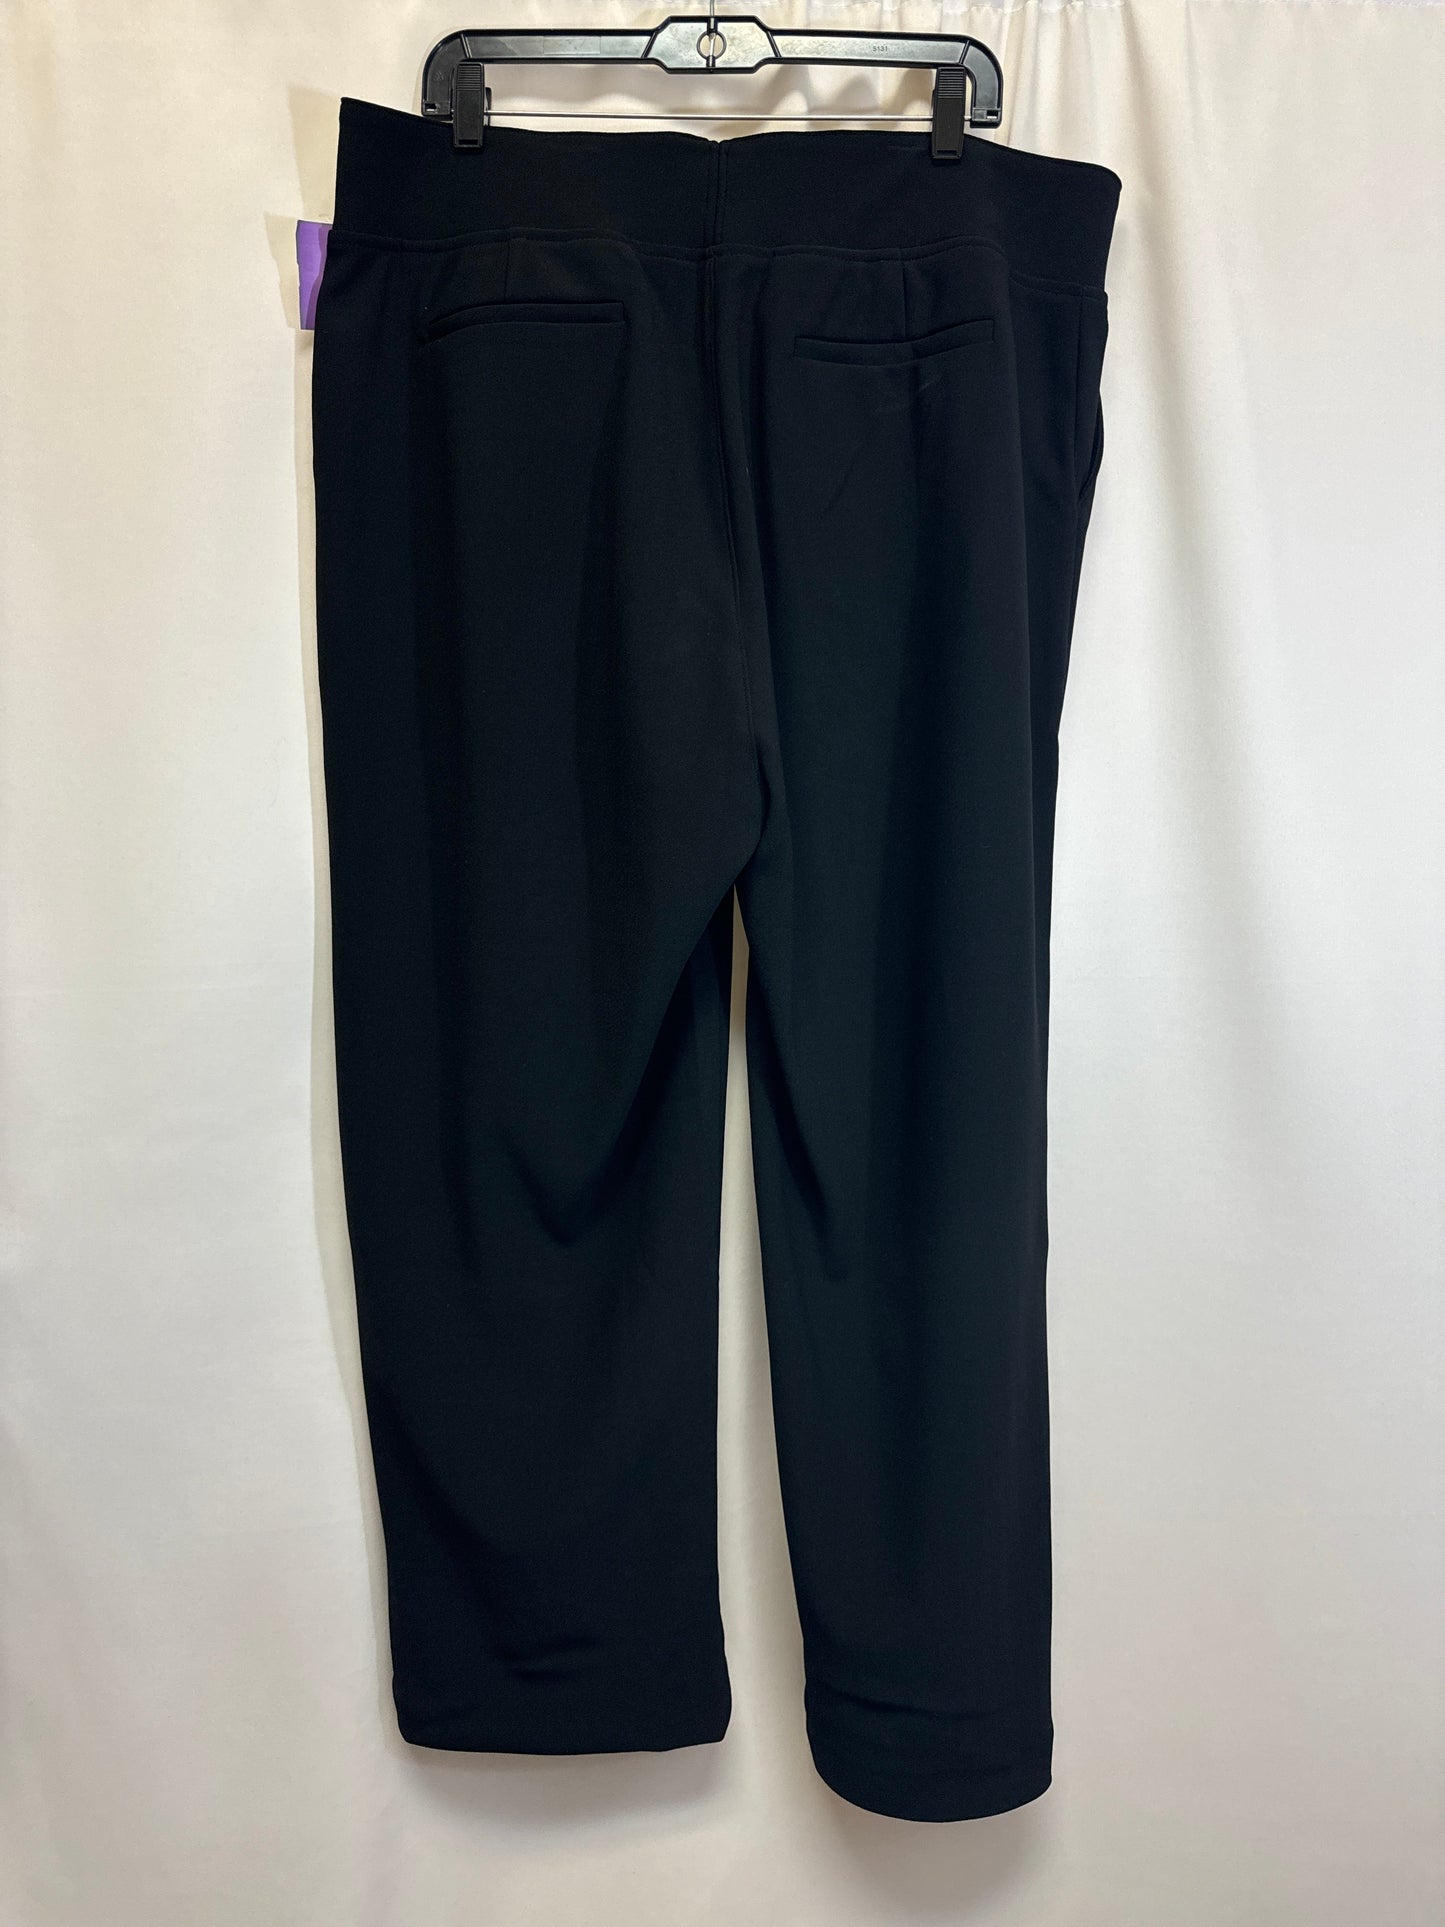 Black Pants Dress Zenana Outfitters, Size 3x